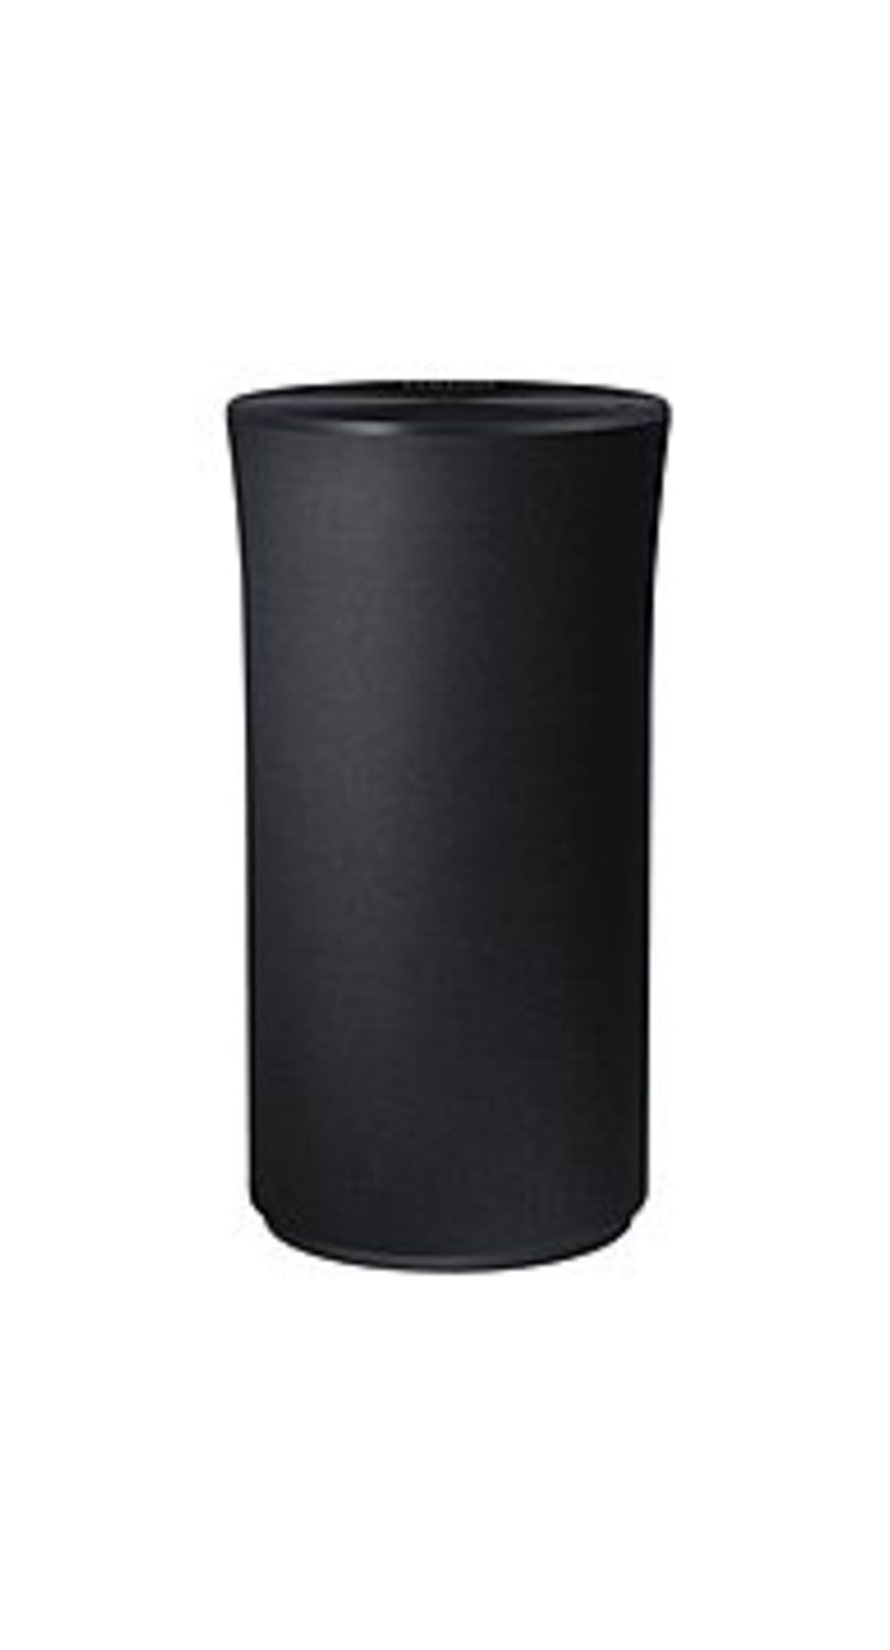 Samsung WAM1500 2-Way Multiroom Wireless Speaker - Black